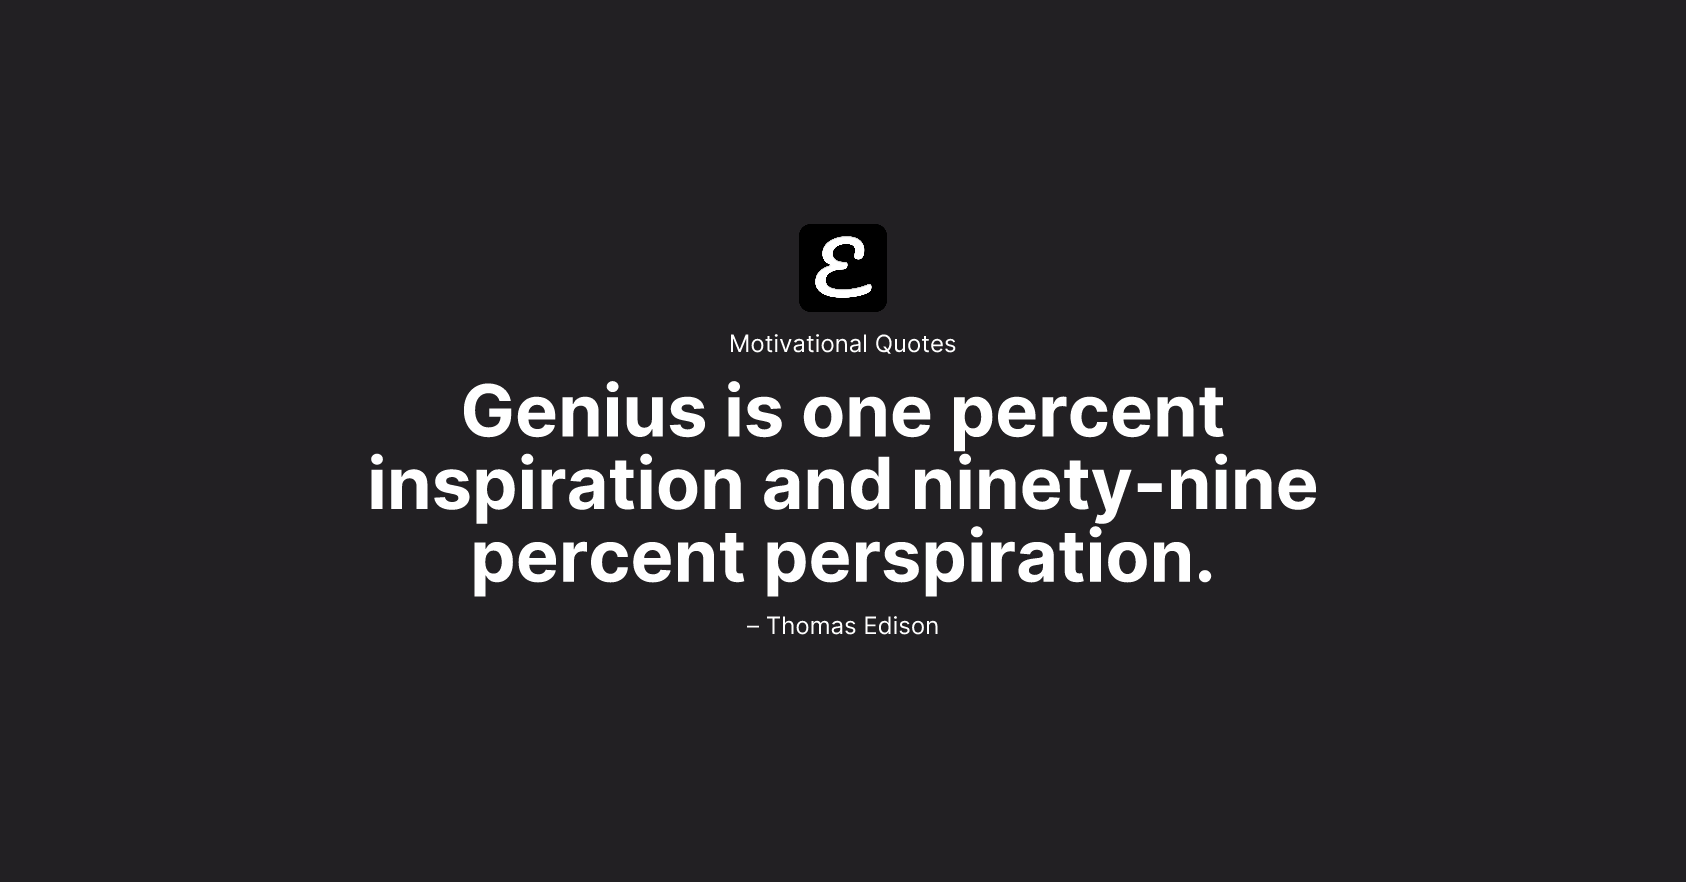 Thomas Edison - Genius is one percent inspiration and ninety-nine percent perspiration.